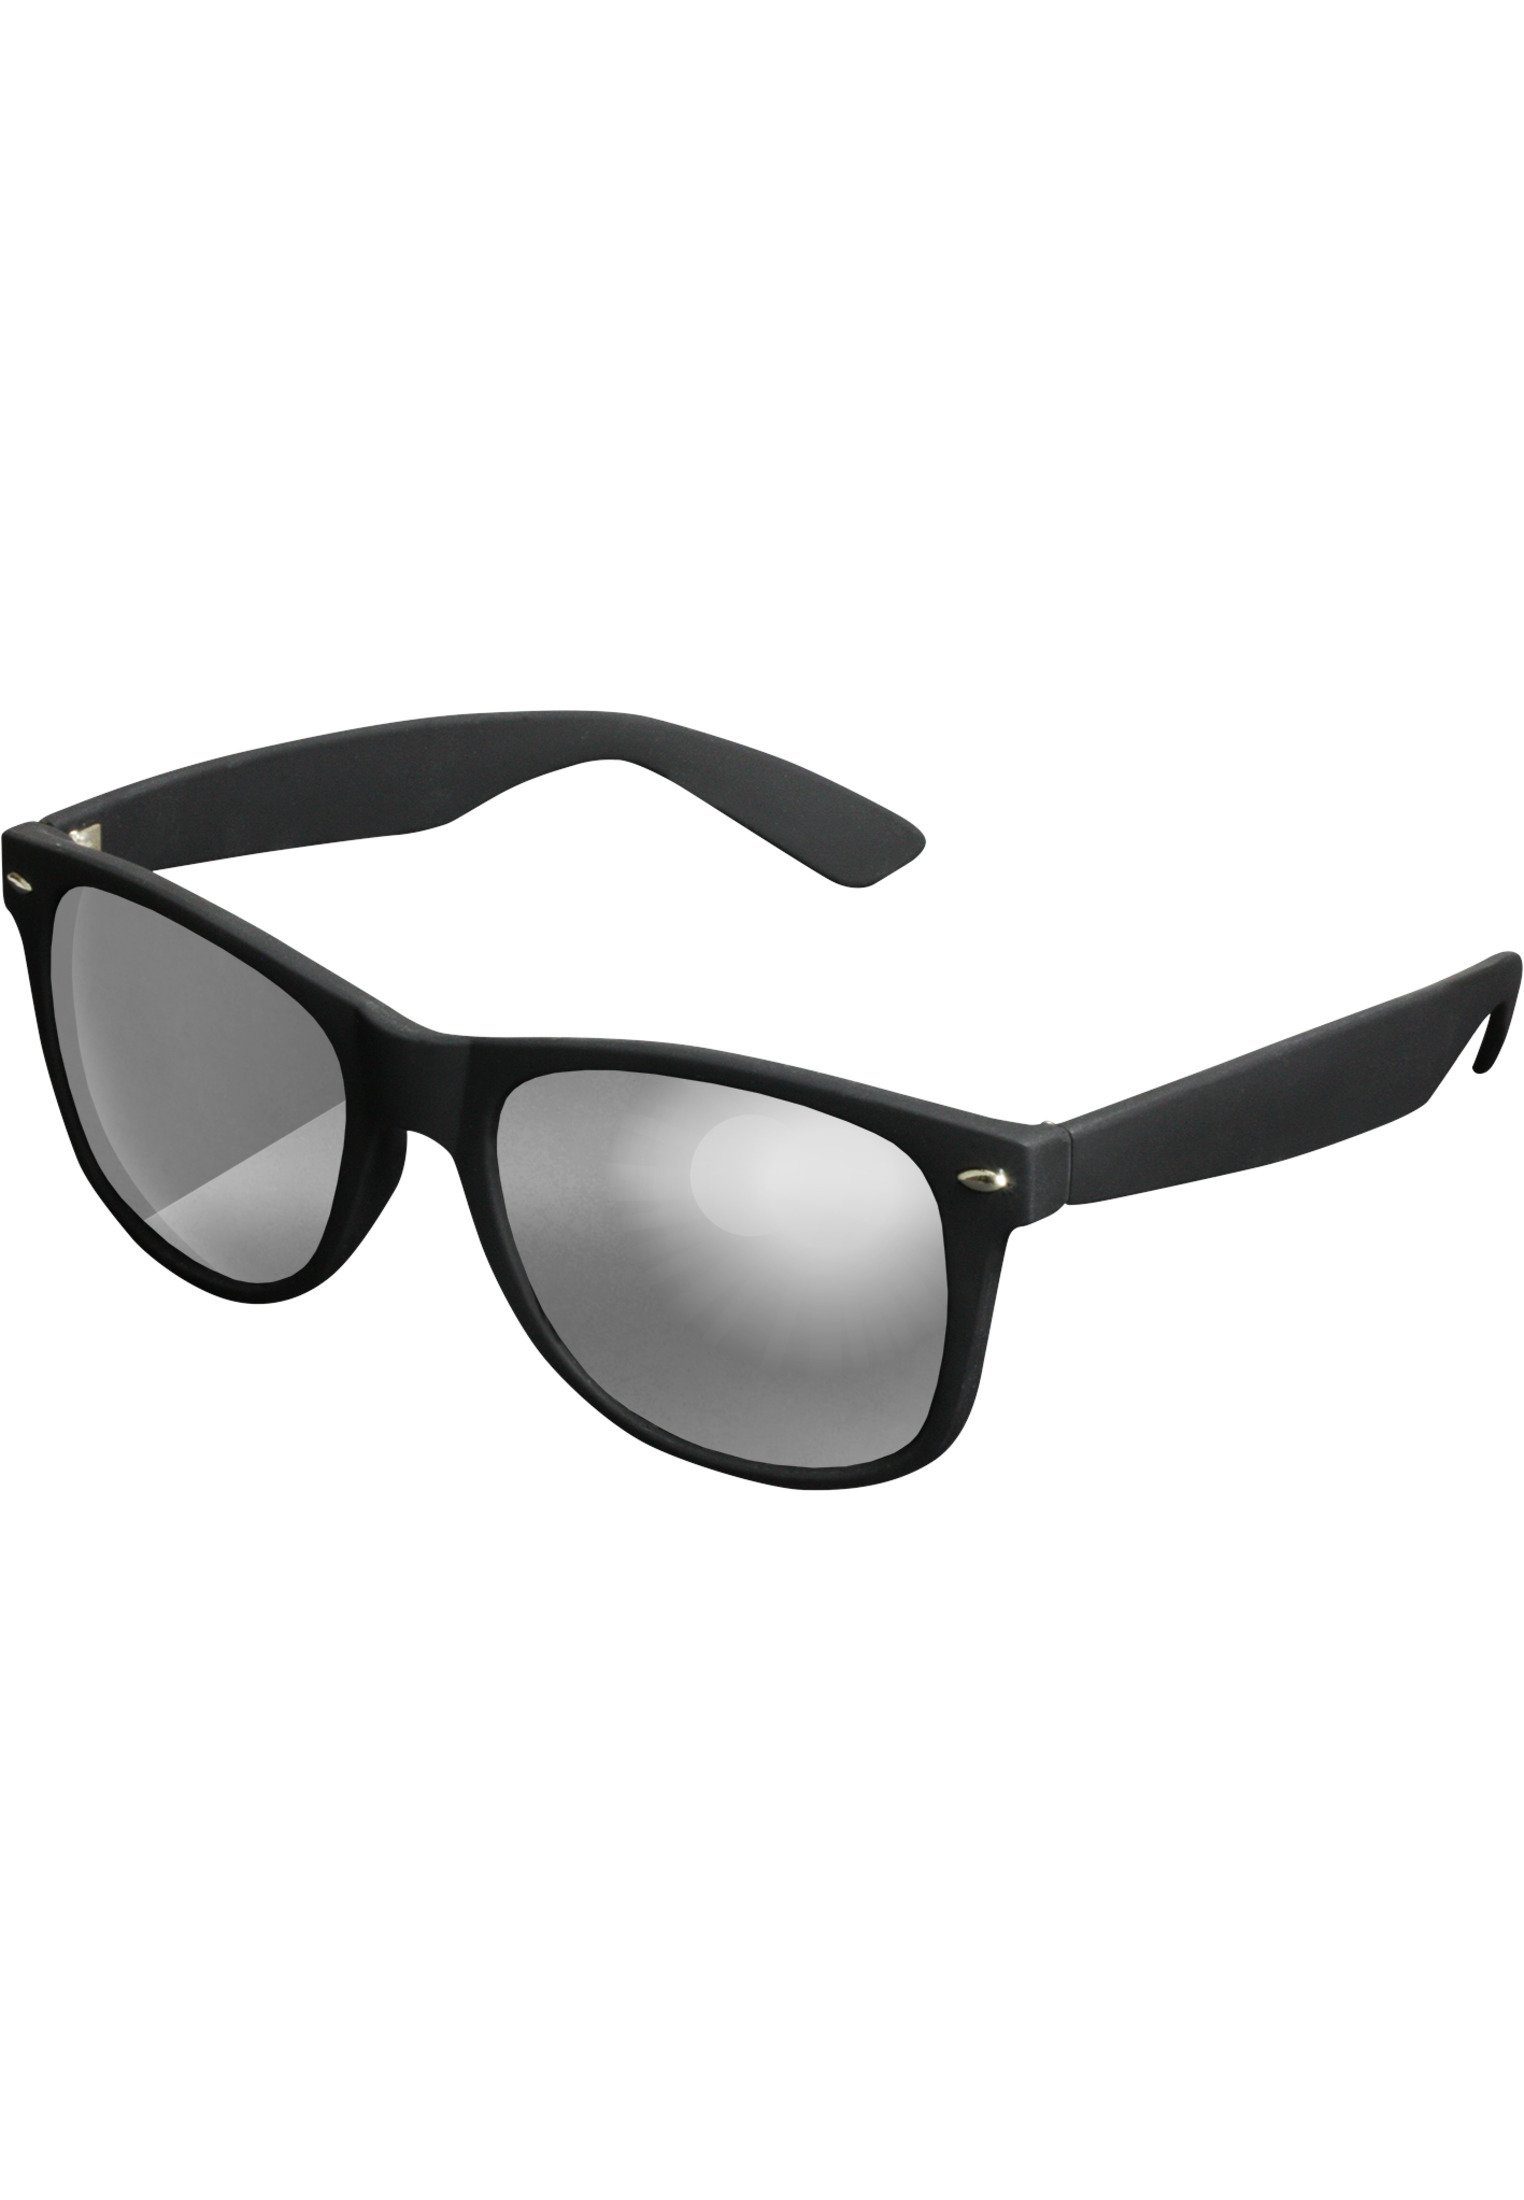 Likoma blk/silver Mirror Sunglasses Sonnenbrille Accessoires MSTRDS